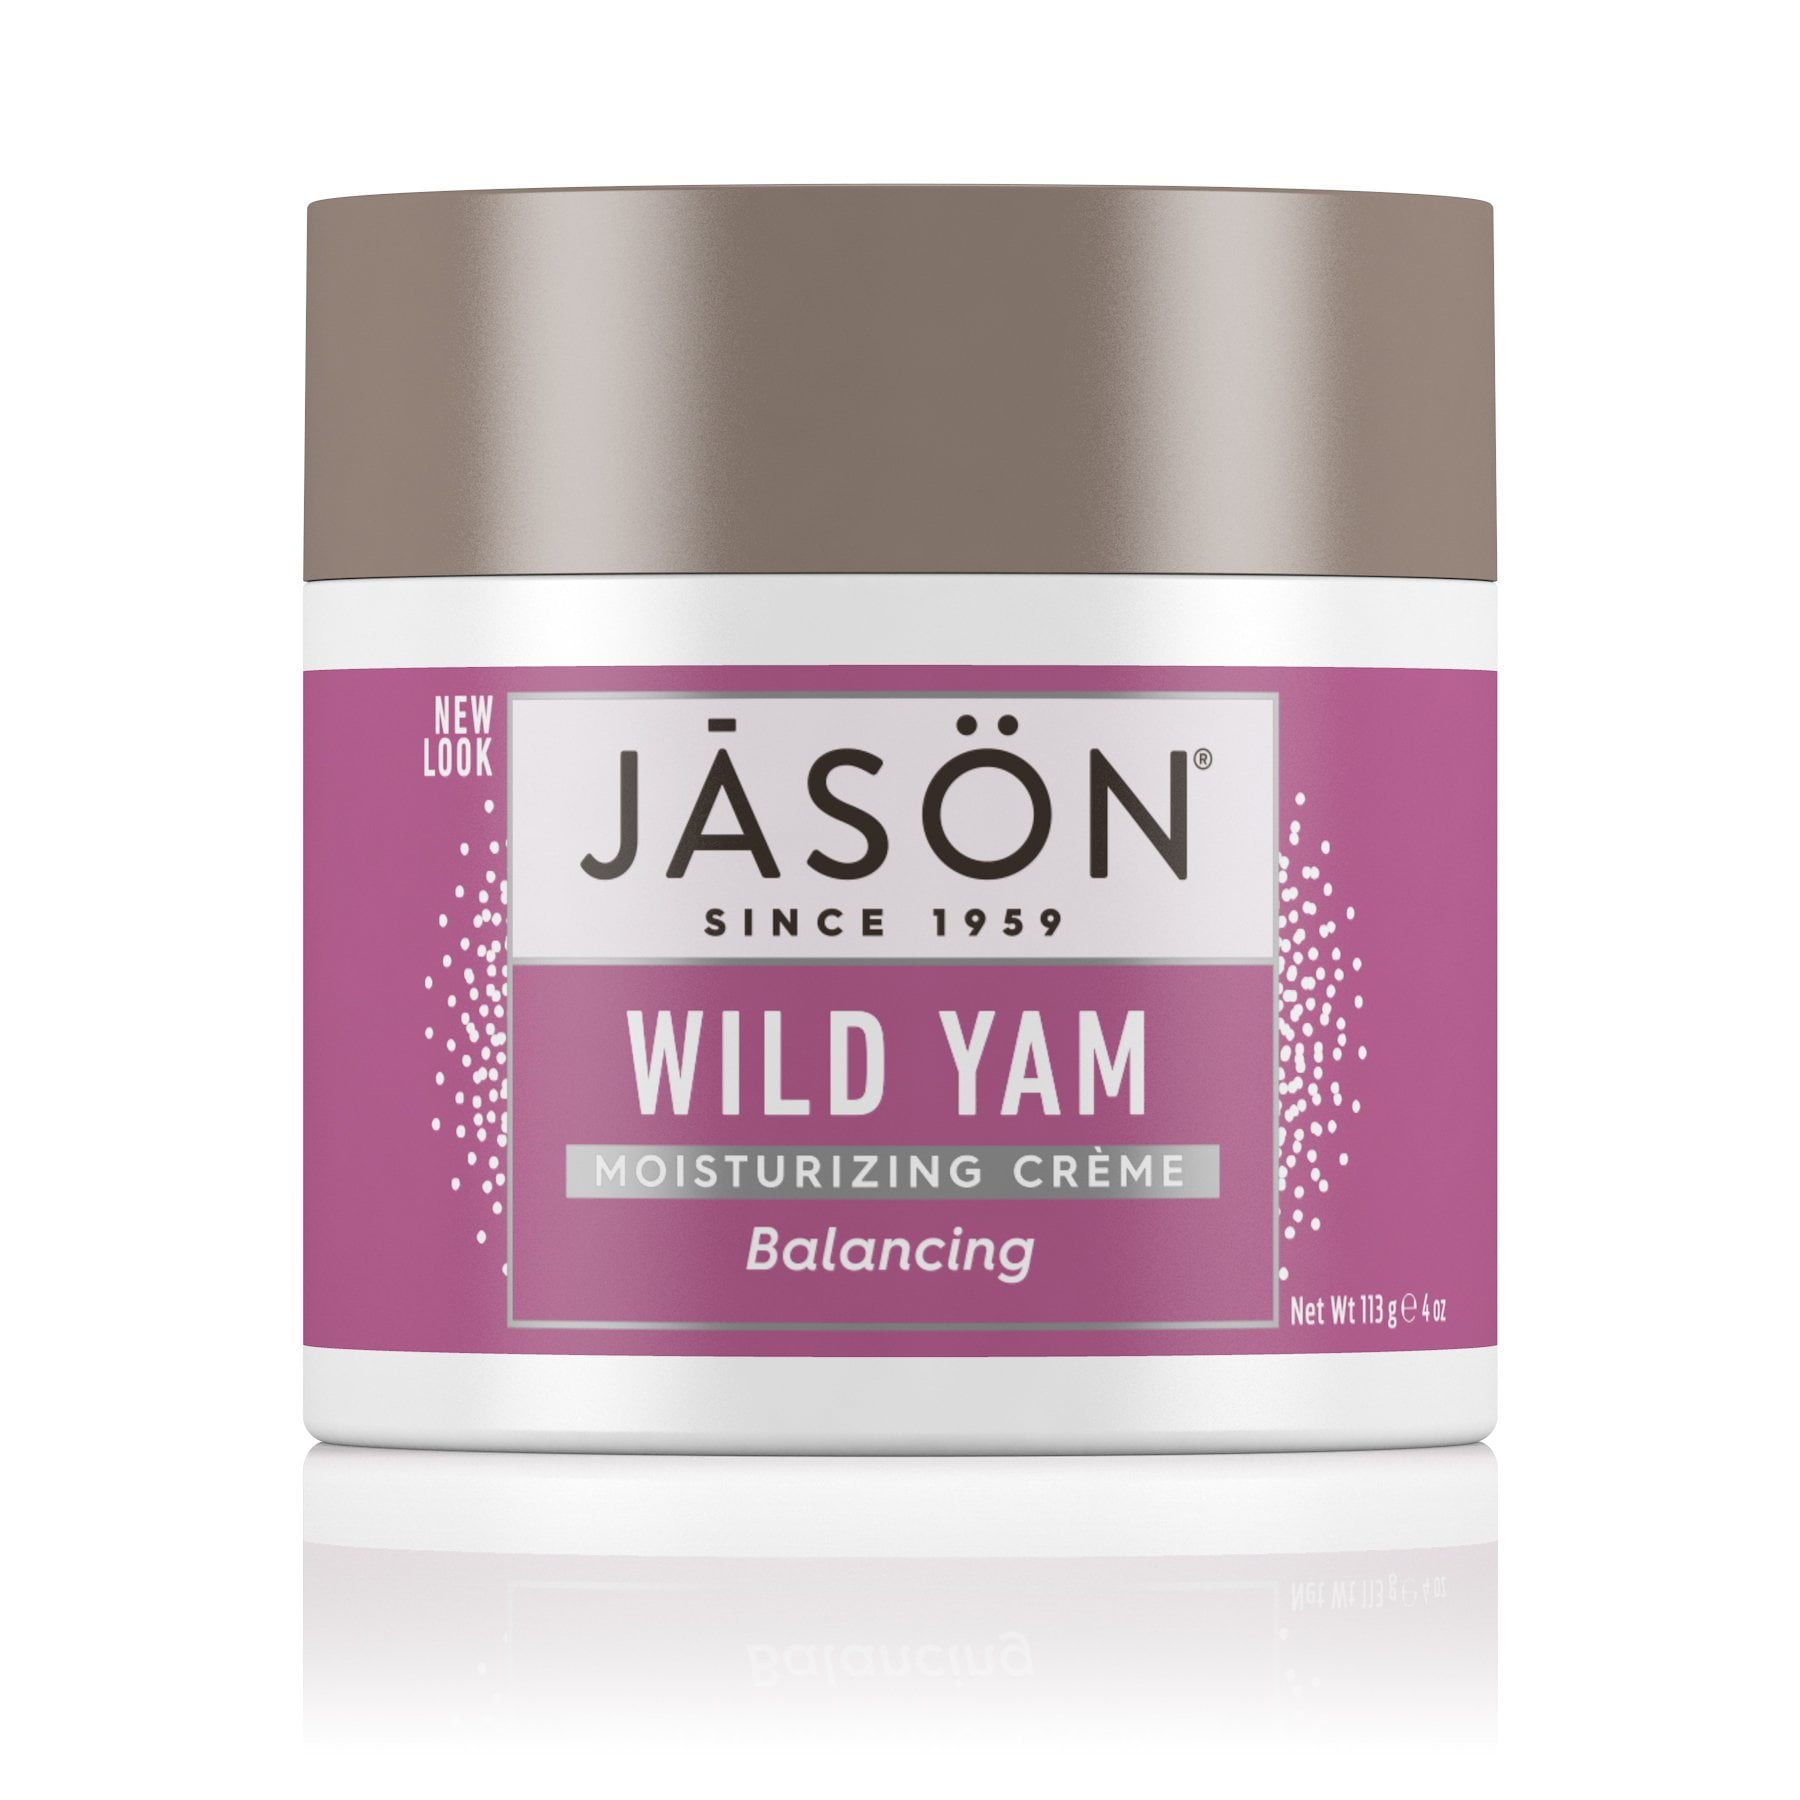 Jason Balancing Wild Yam Moisturizing Creme, 4 oz - Walmart.com.